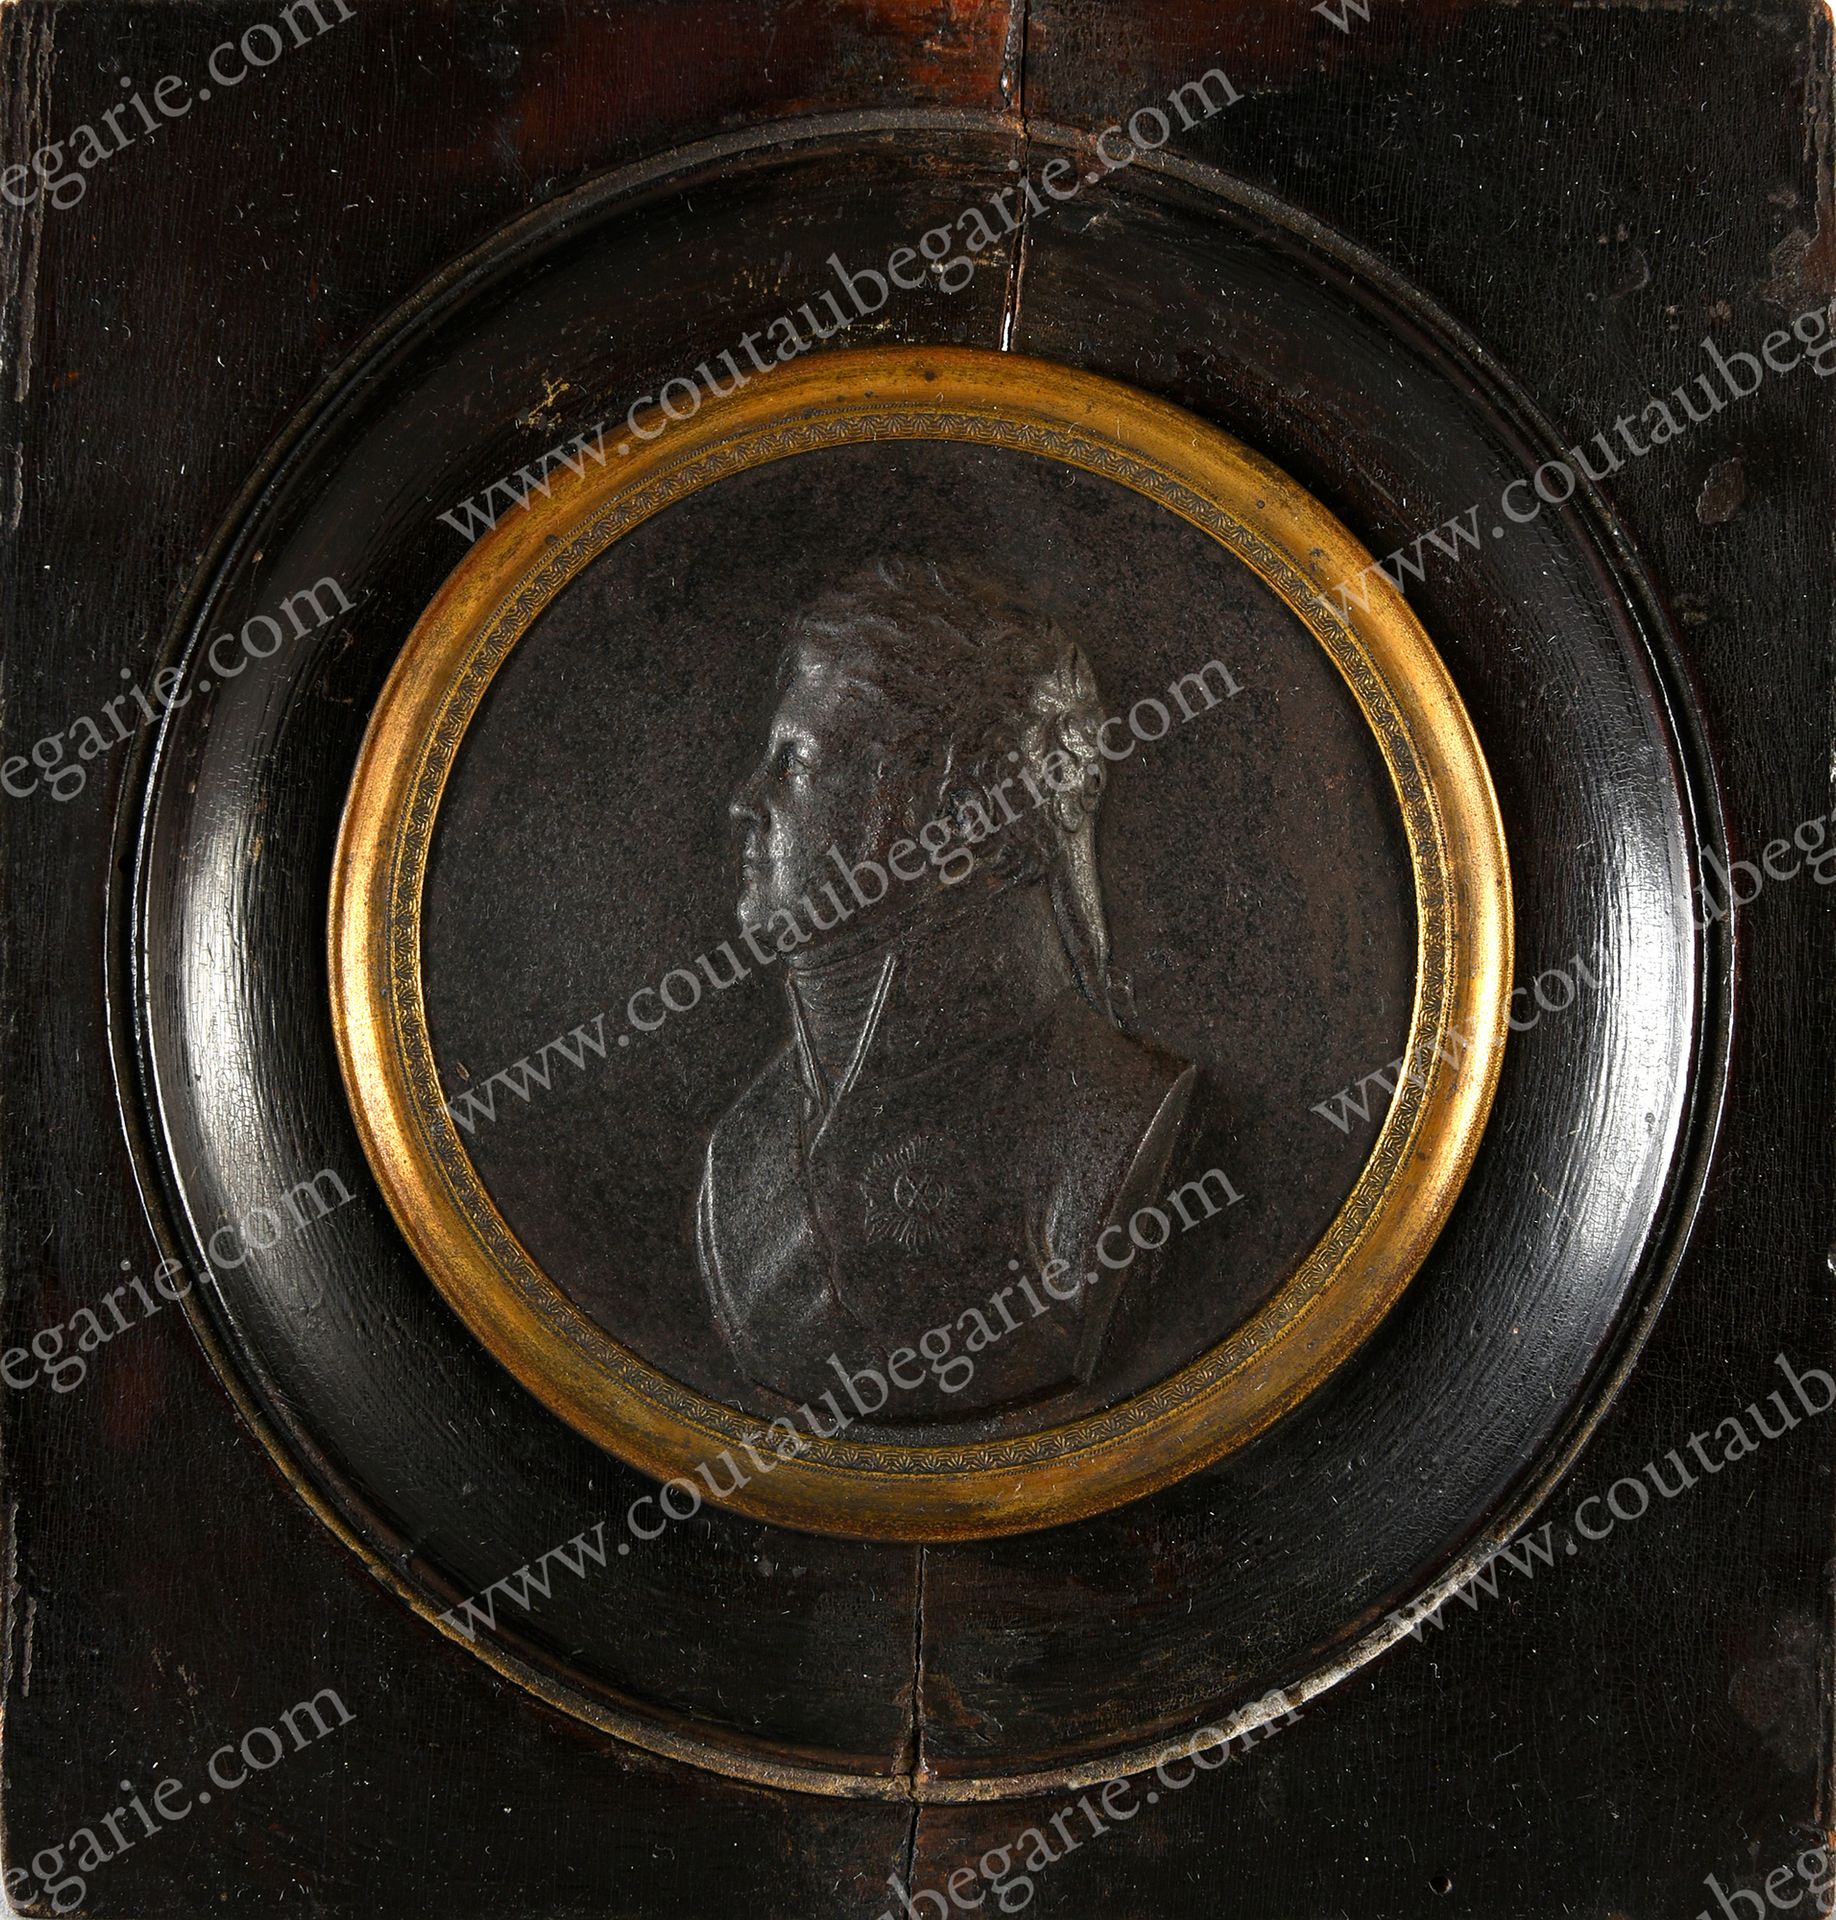 Null 亚历山大一世，俄罗斯皇帝（1777-1825）。
圆形铸铁奖章，带有黑色的铜锈，表现了君主的轮廓，他的头转向左边，被一个带凹槽的鎏金铜楣环绕，保存在原&hellip;